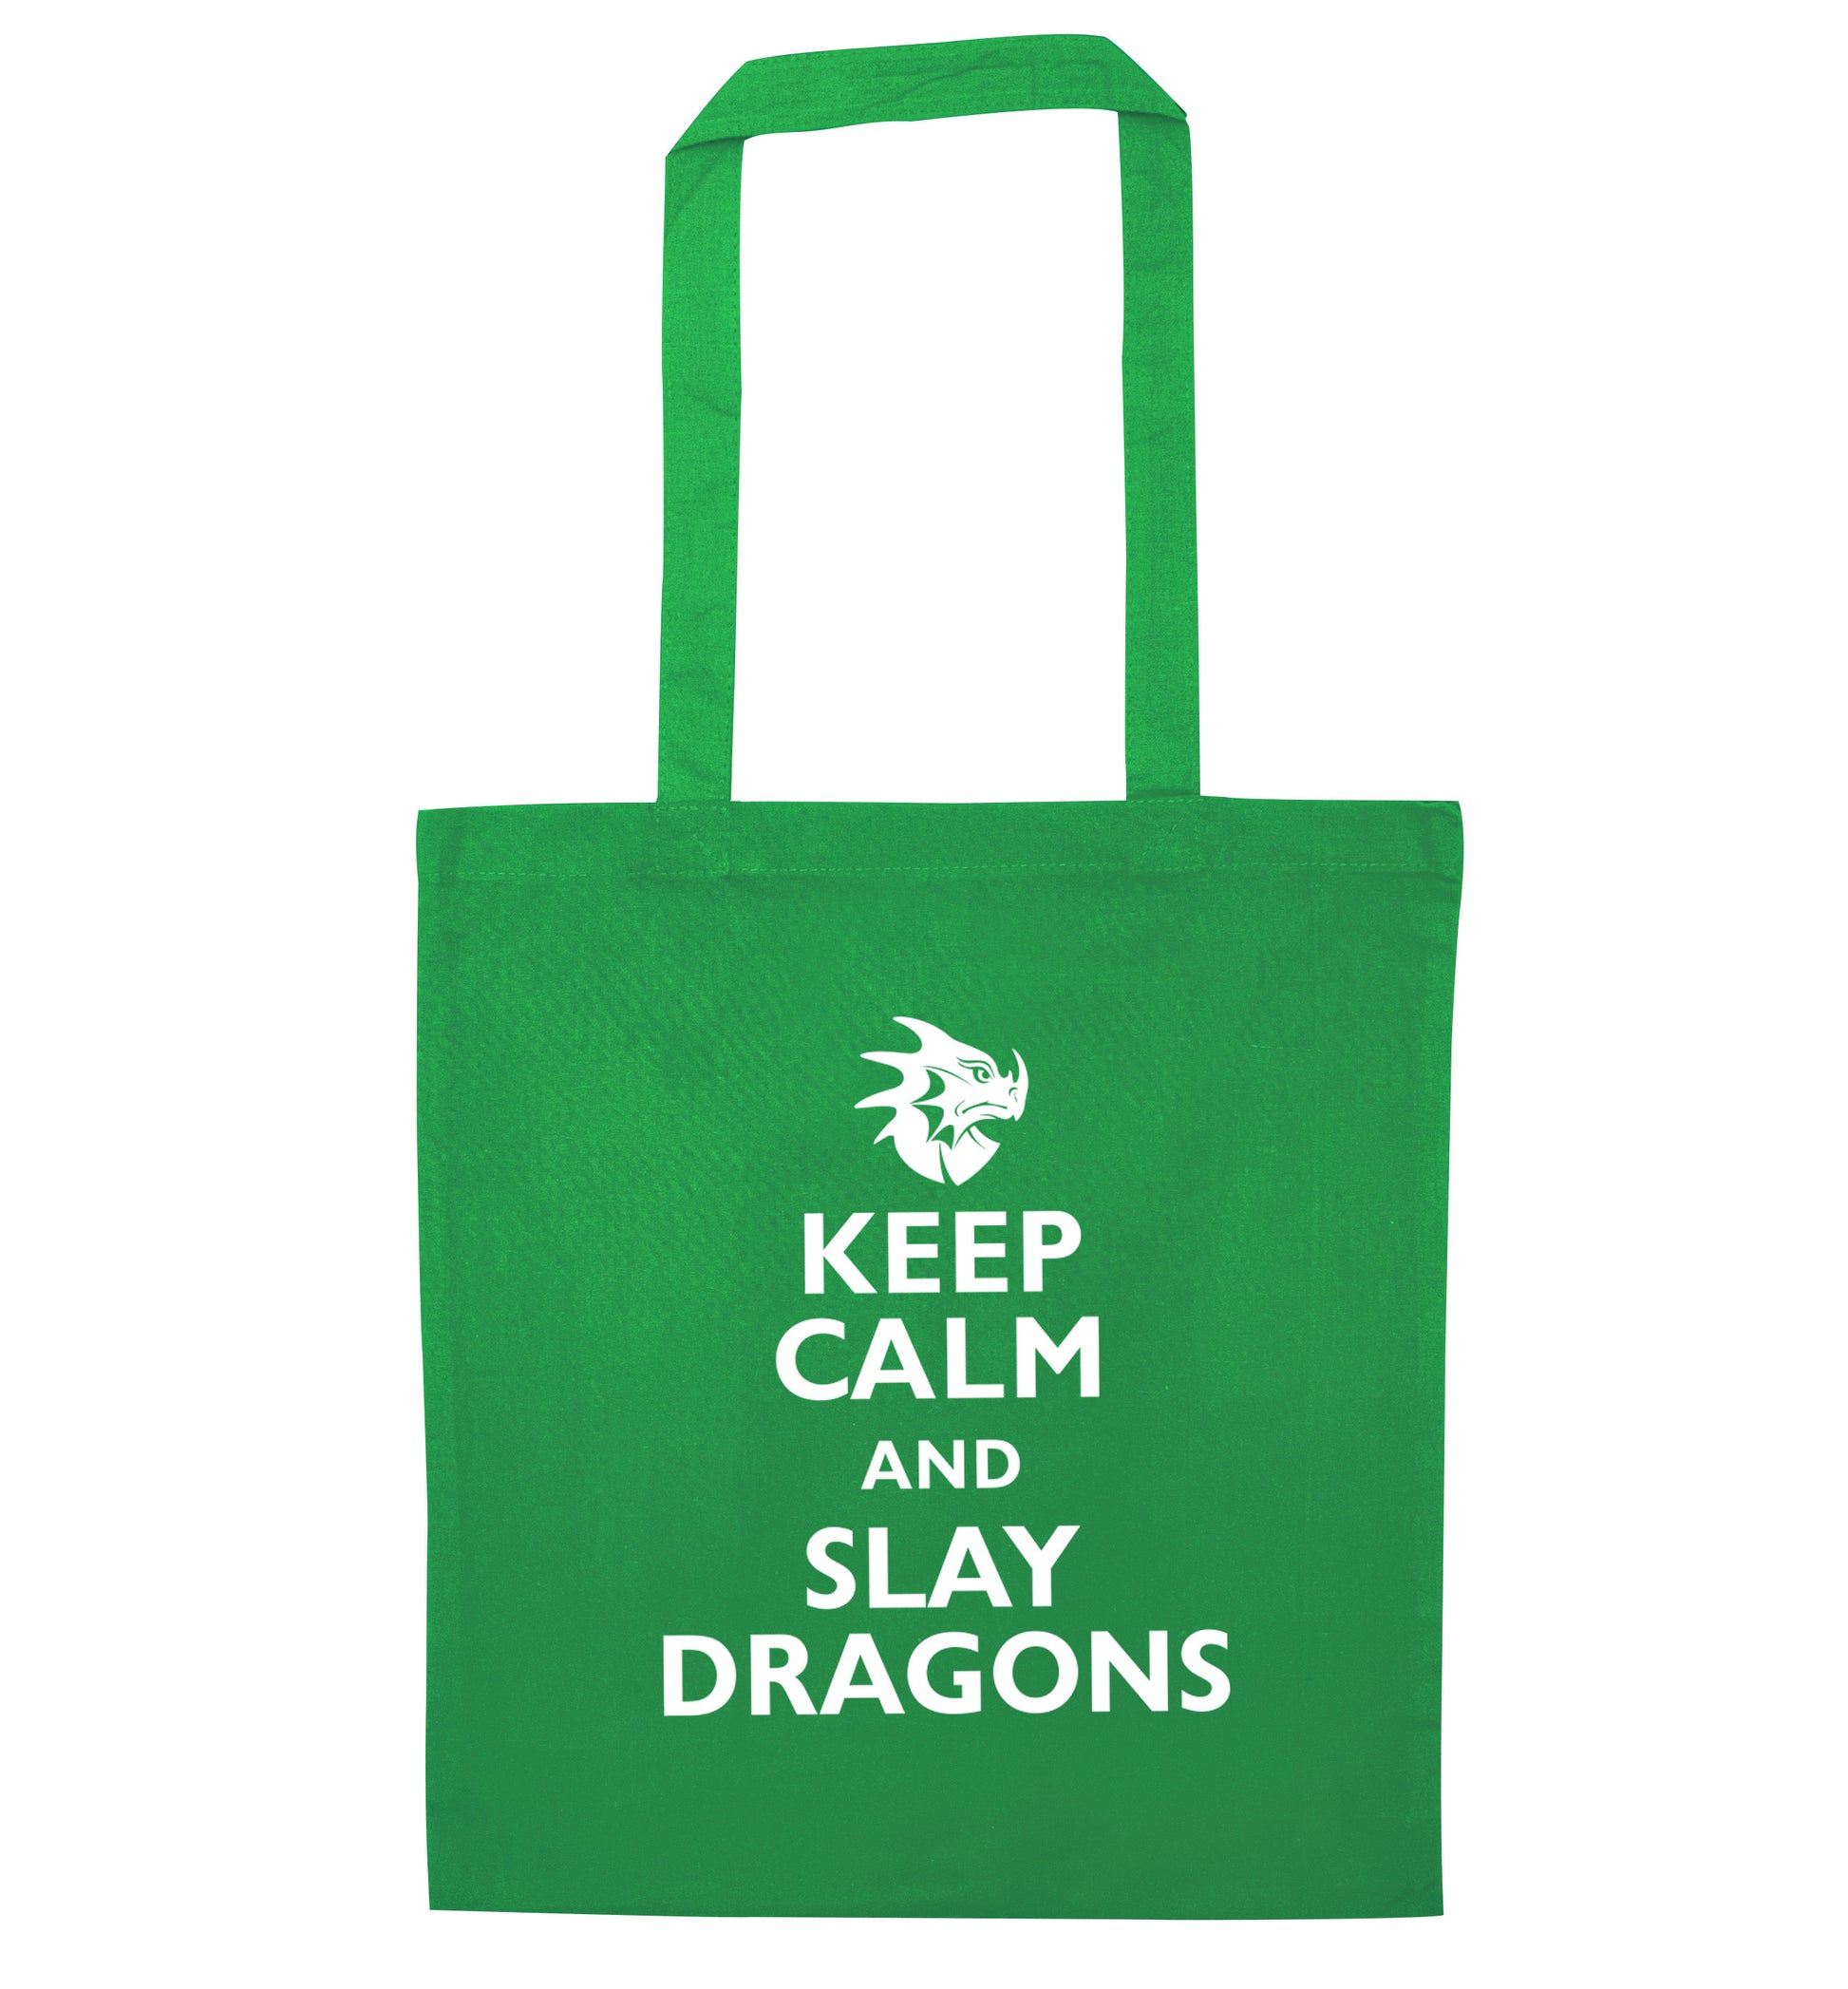 Keep calm and slay dragons green tote bag